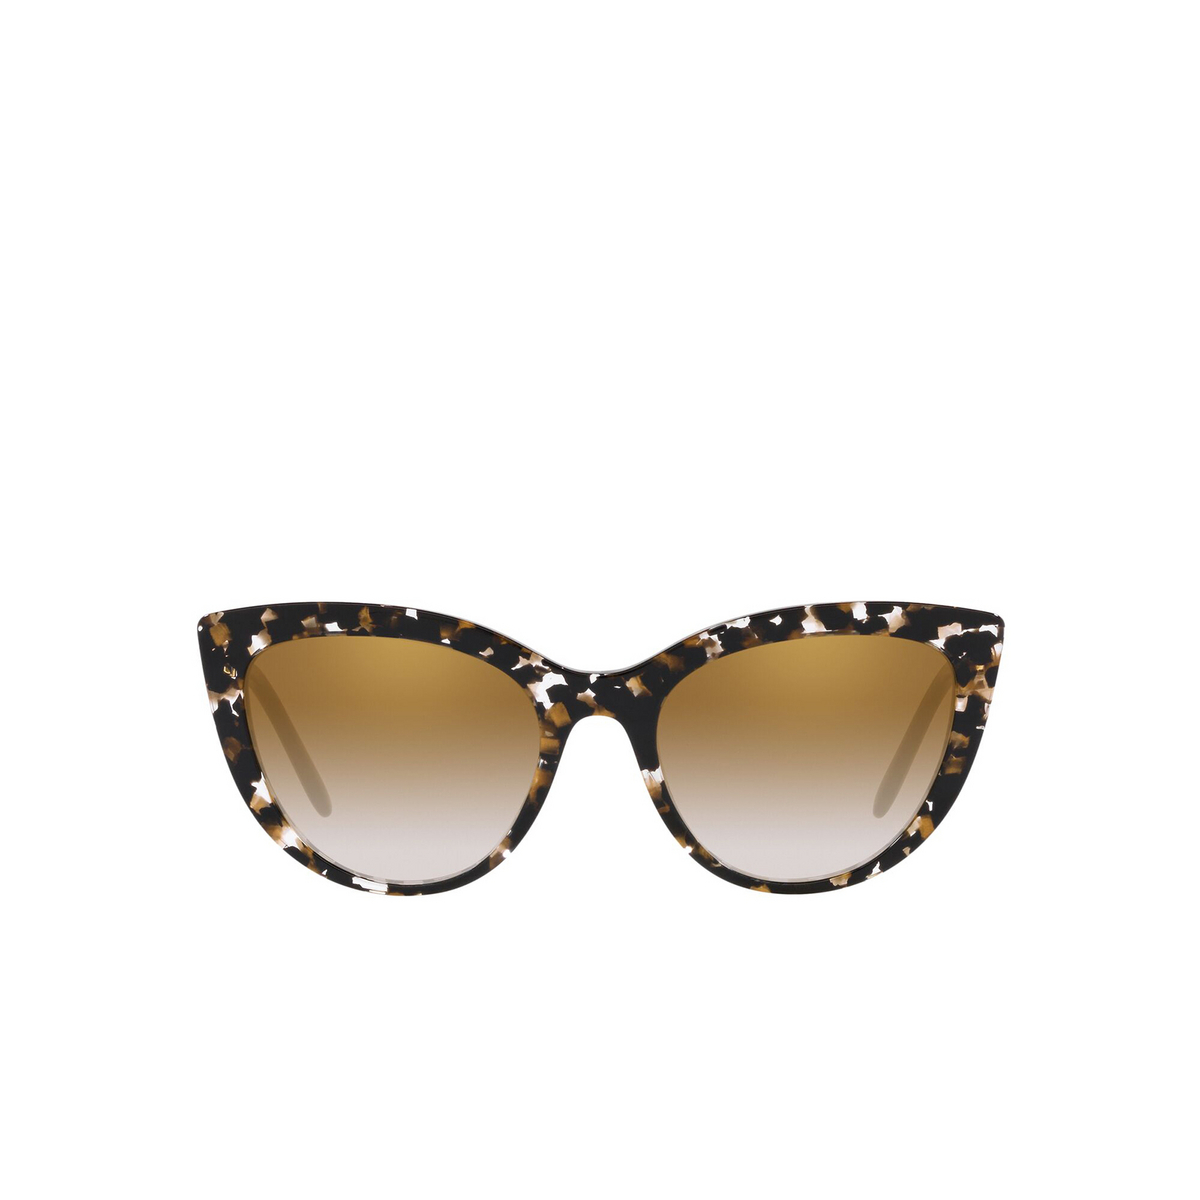 Dolce & Gabbana DG4408 Sunglasses 911/6E Cube Black / Gold - front view